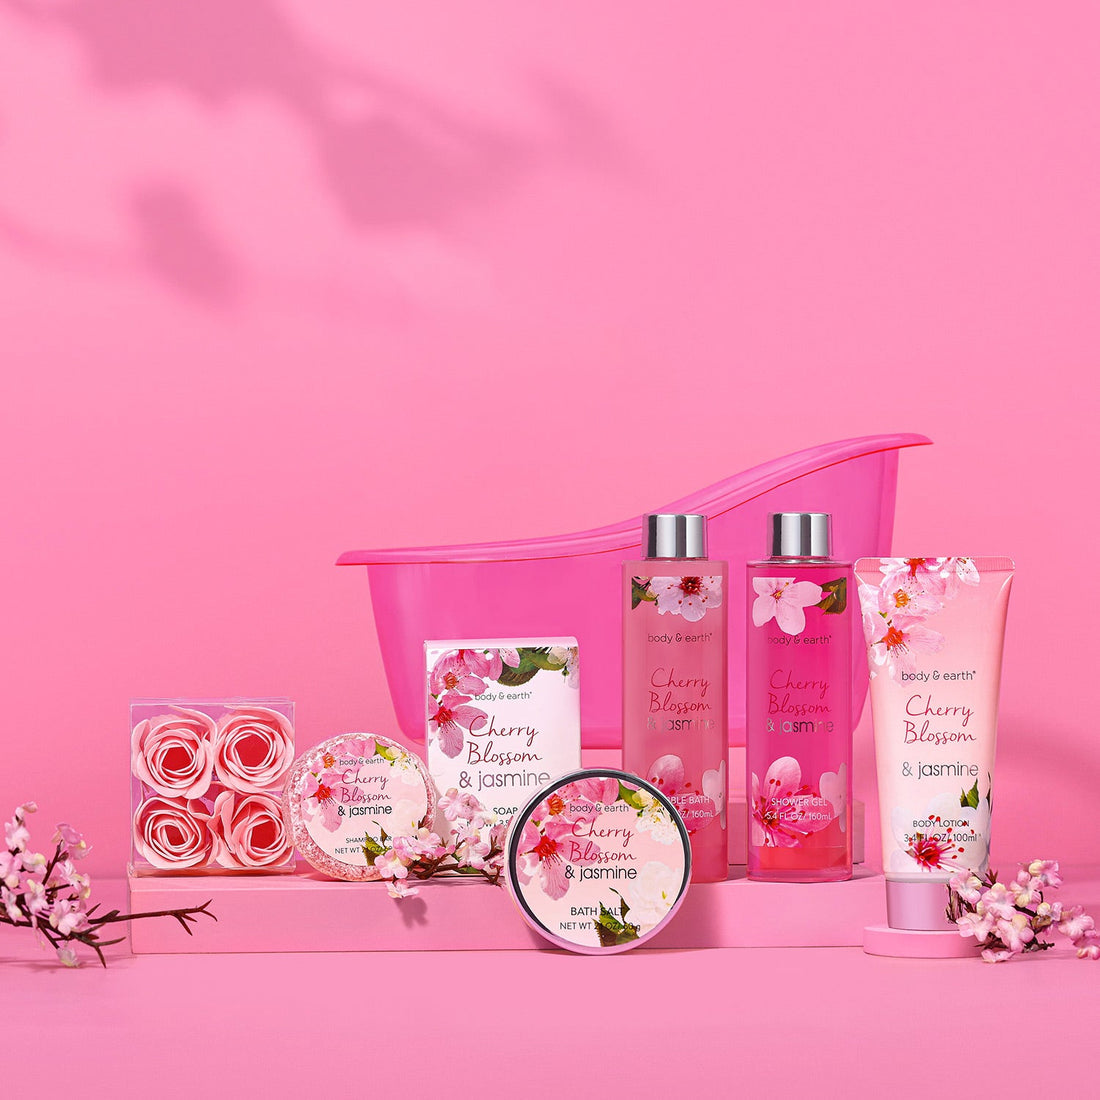 Body &amp; Earth Gift Sets Cherry Blossom &amp; Jasmine Spa Bathtub Set